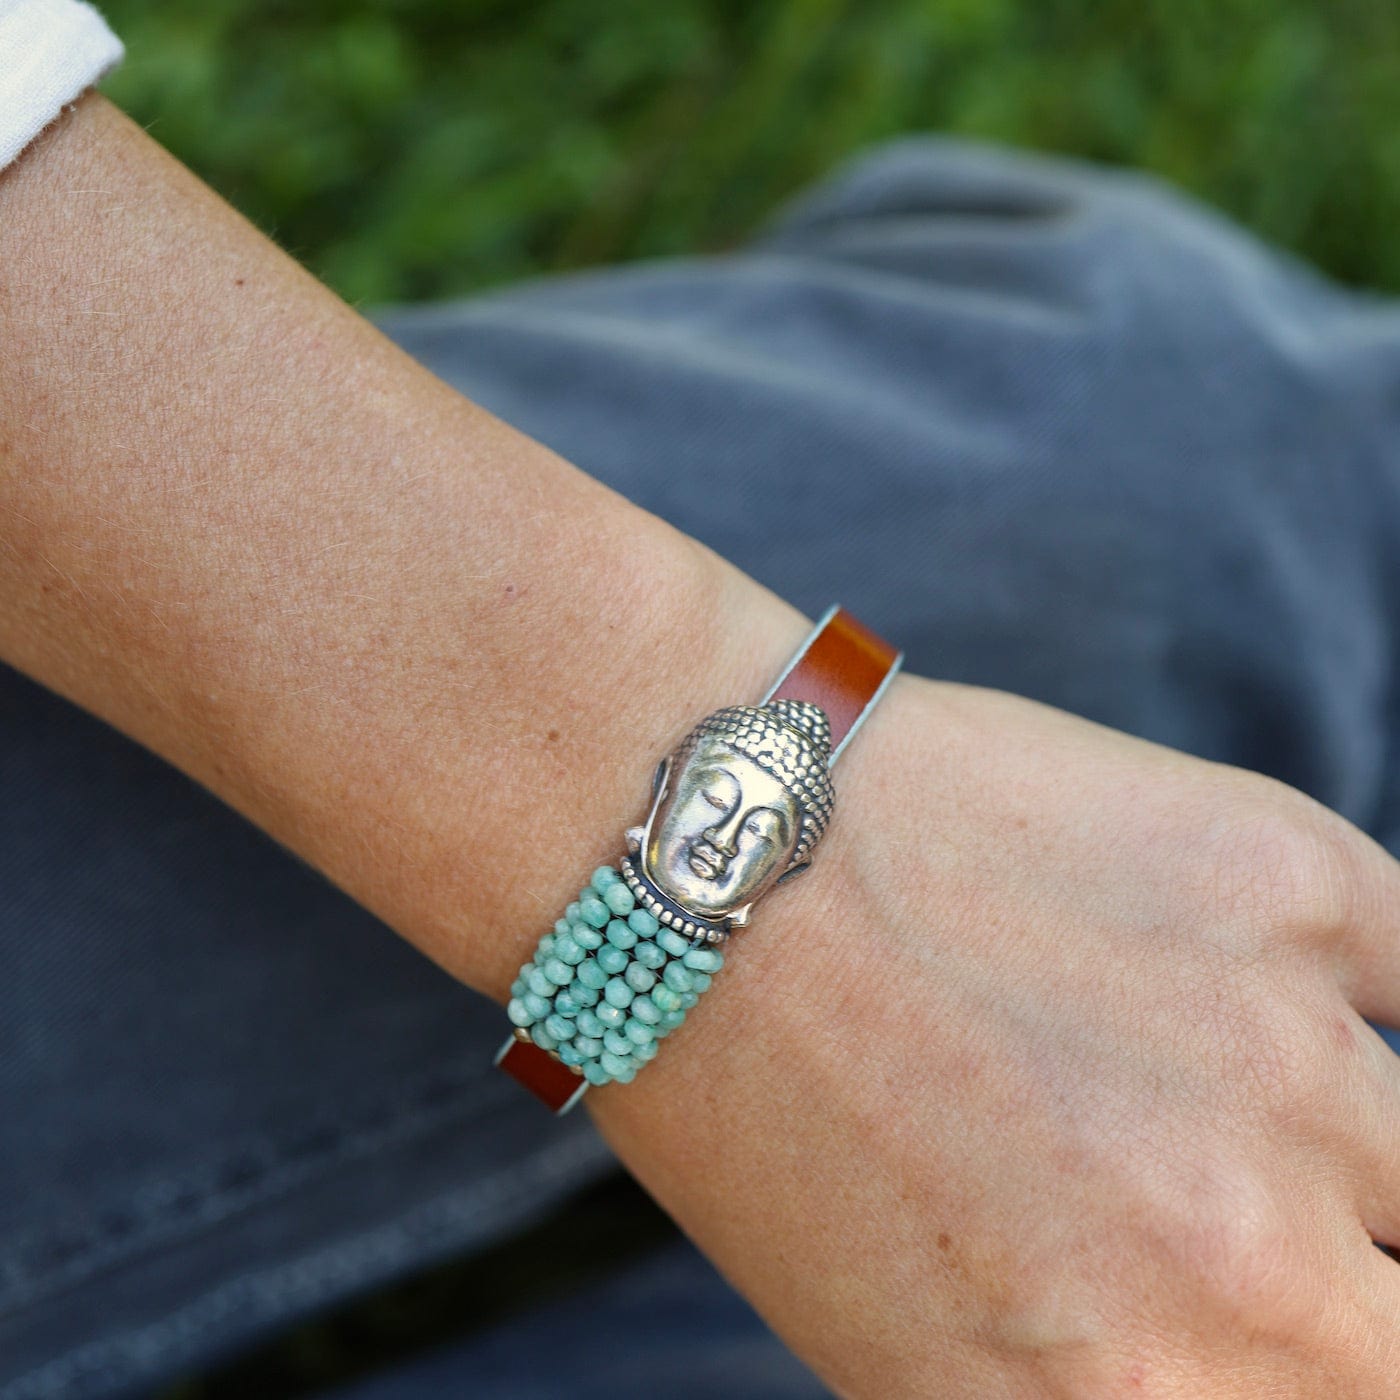 BRC-JM Hand Stitched Amazonite on Leather Bracelet with Buddha Clasp